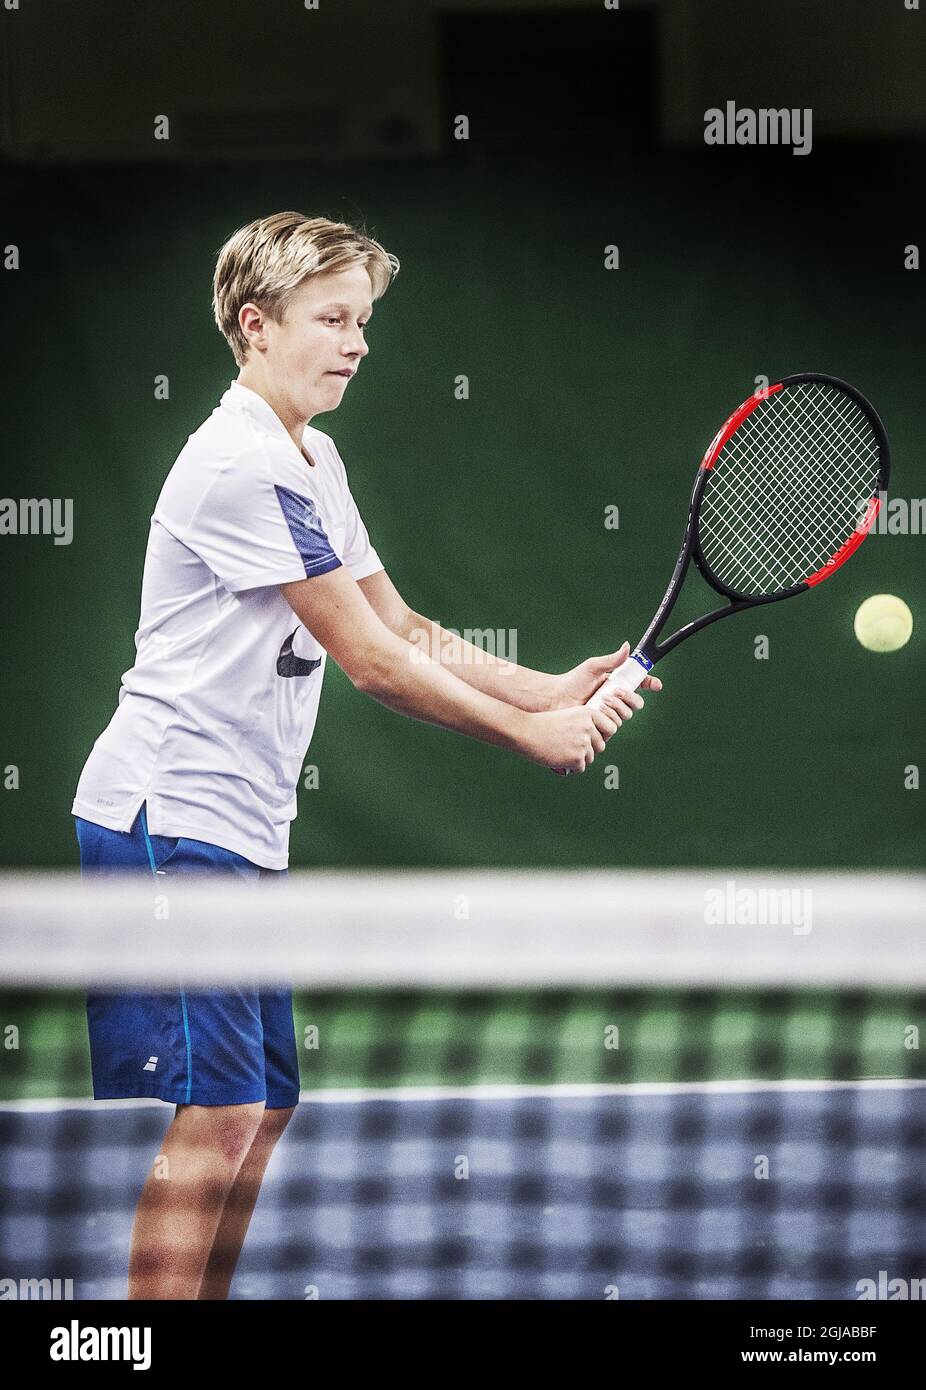 Fila Signs Tennis Legend Björn Borg's 15-Year-Old Son Leo